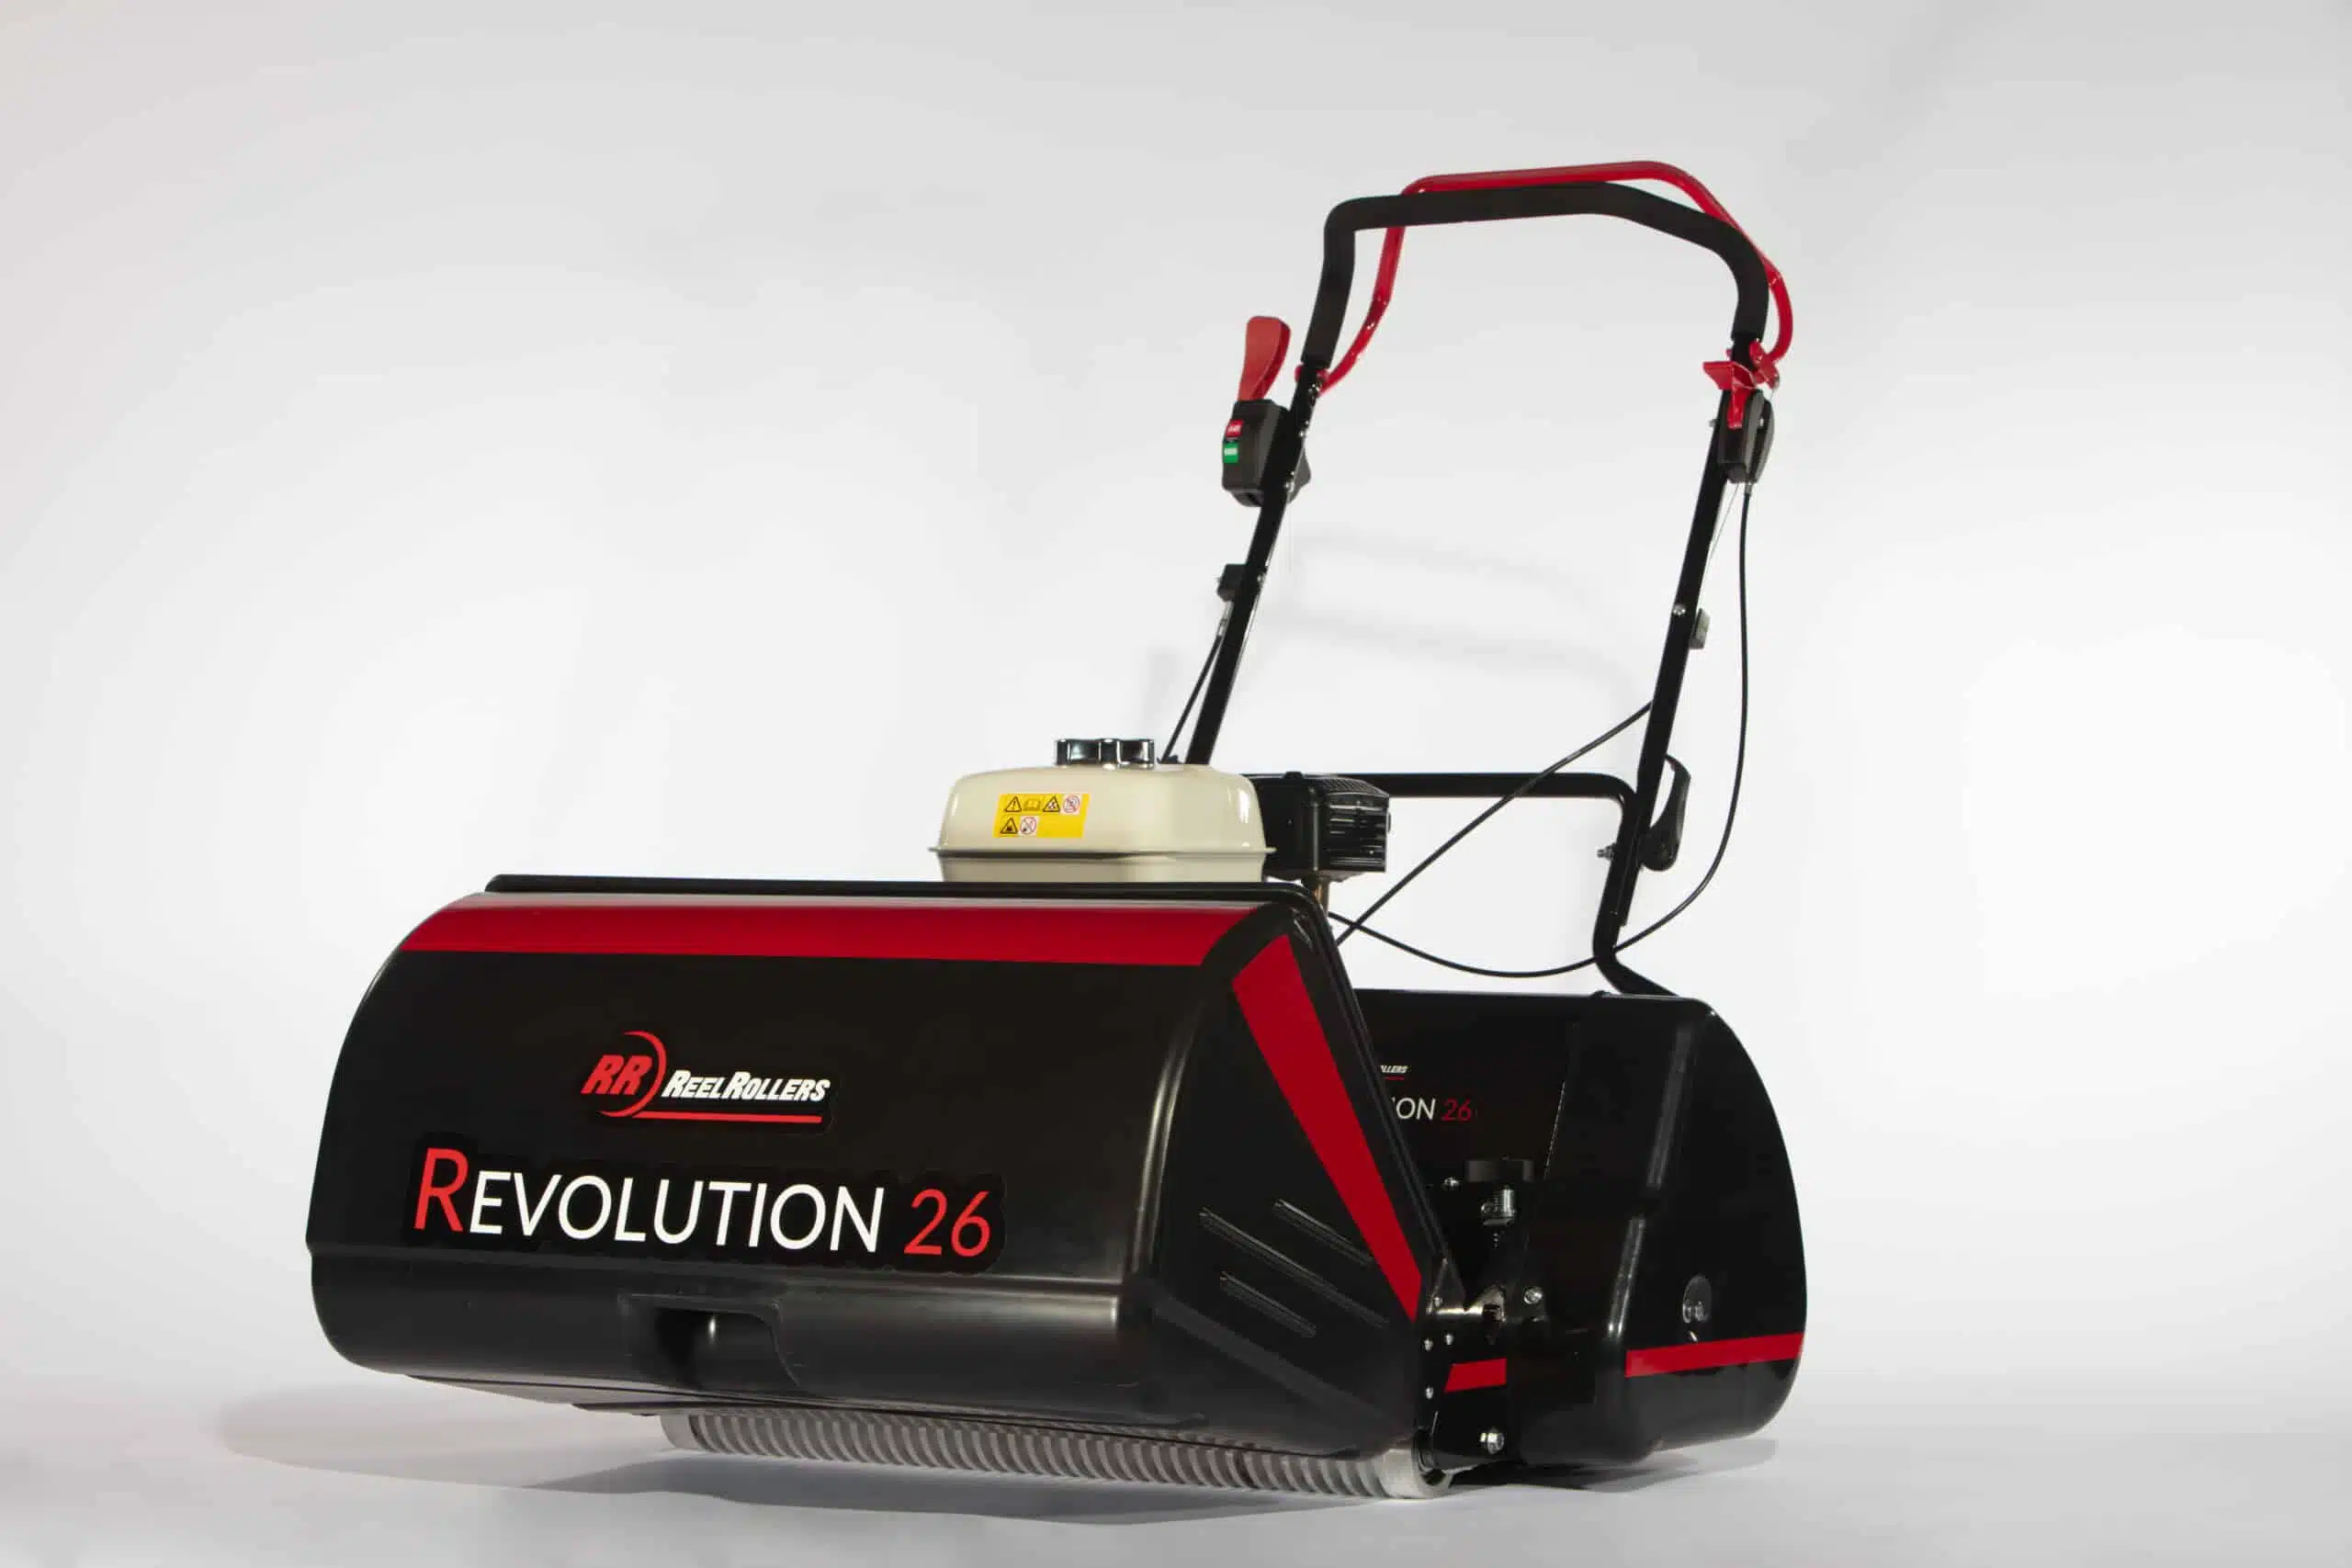 Revolution 26 Reel Mower from Reel Rollers with Honda GX160